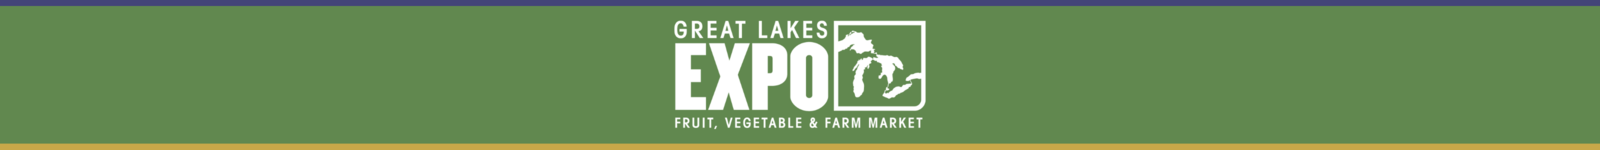 Great Lakes Fruit Vegetable & Farm Market Expo logo